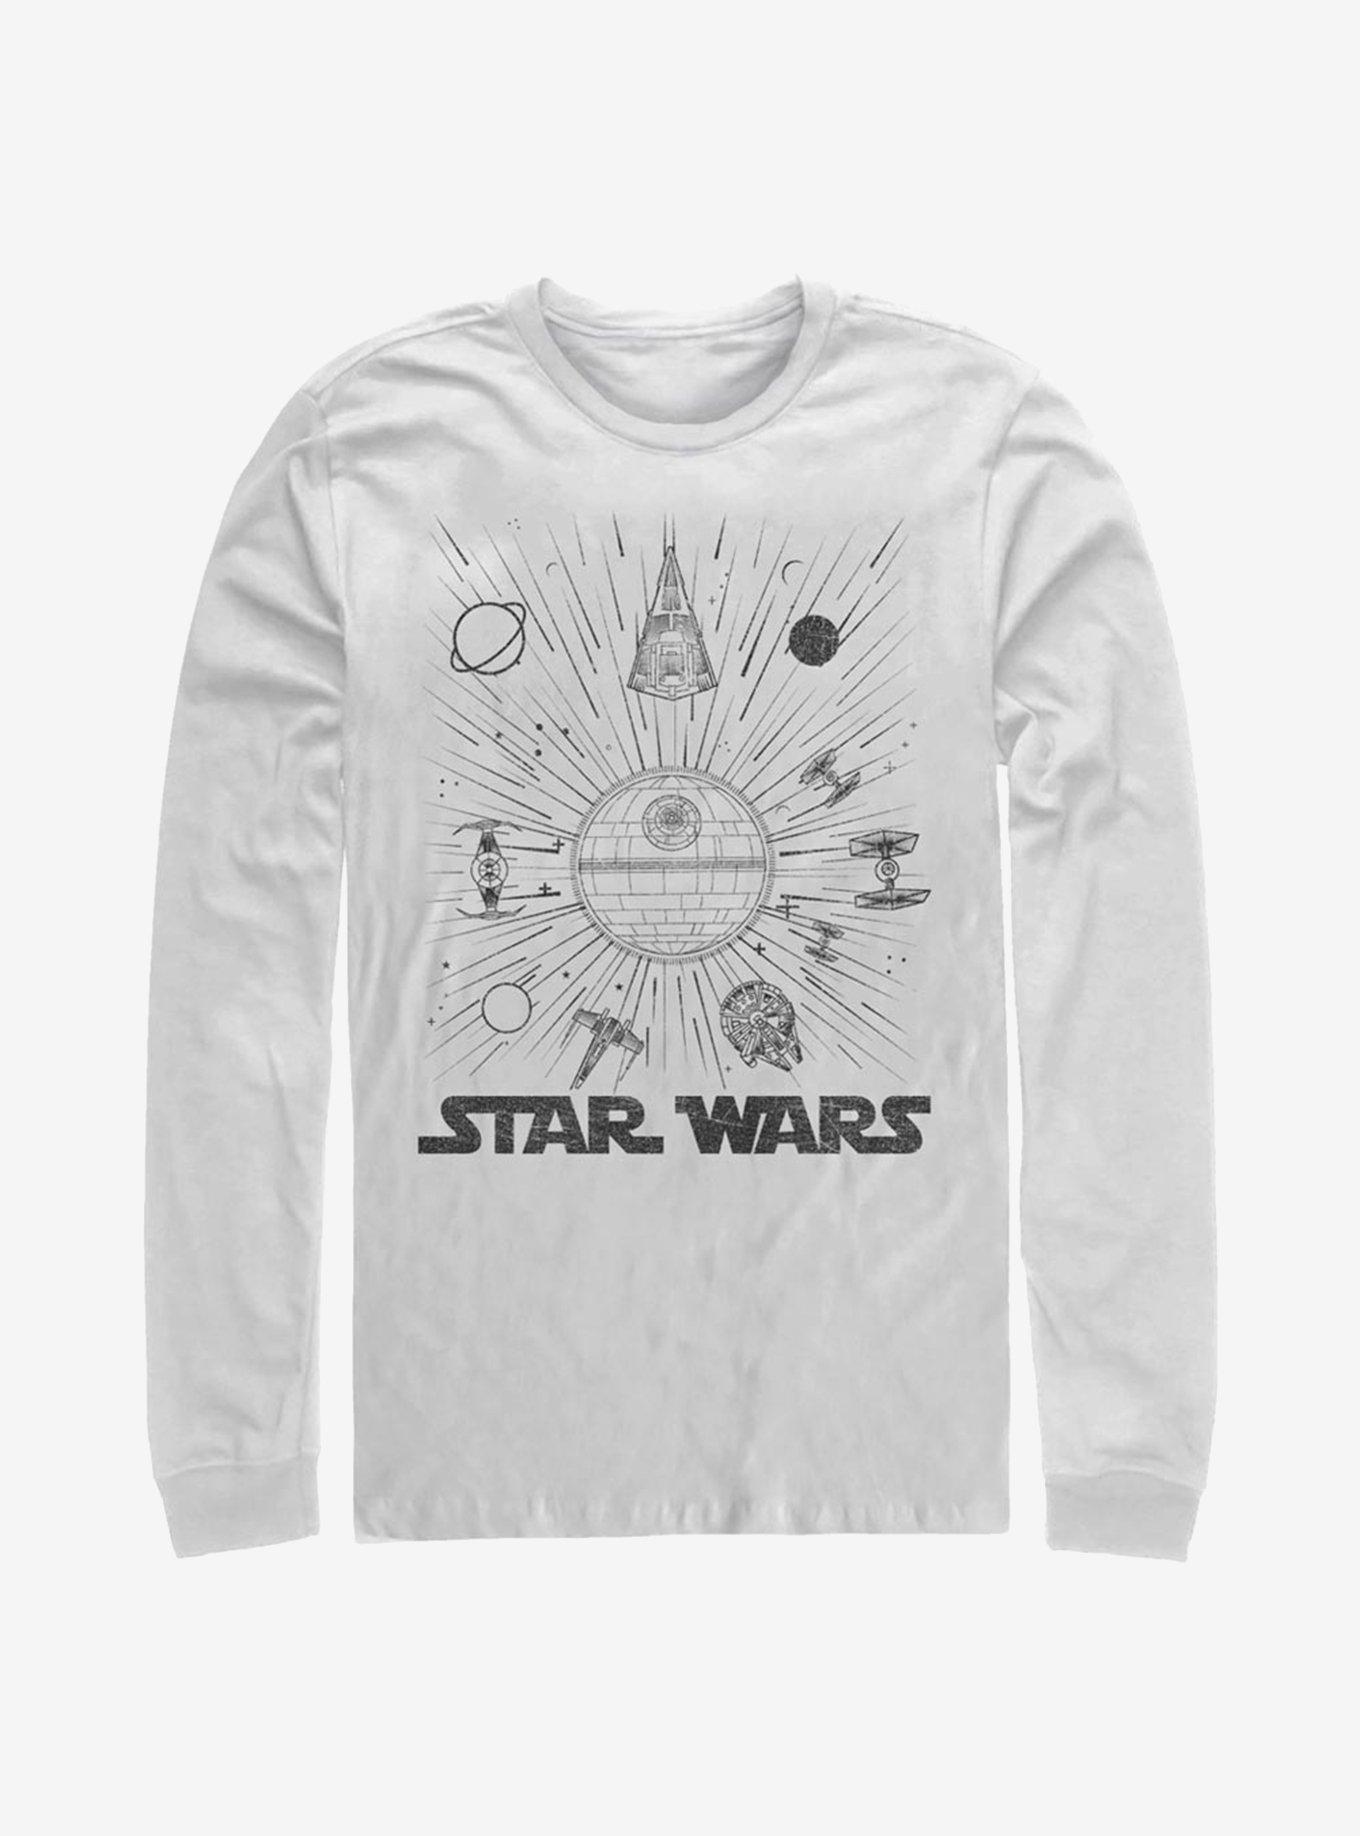 Star Wars Ships And Lines Burst Long-Sleeve T-Shirt, , hi-res